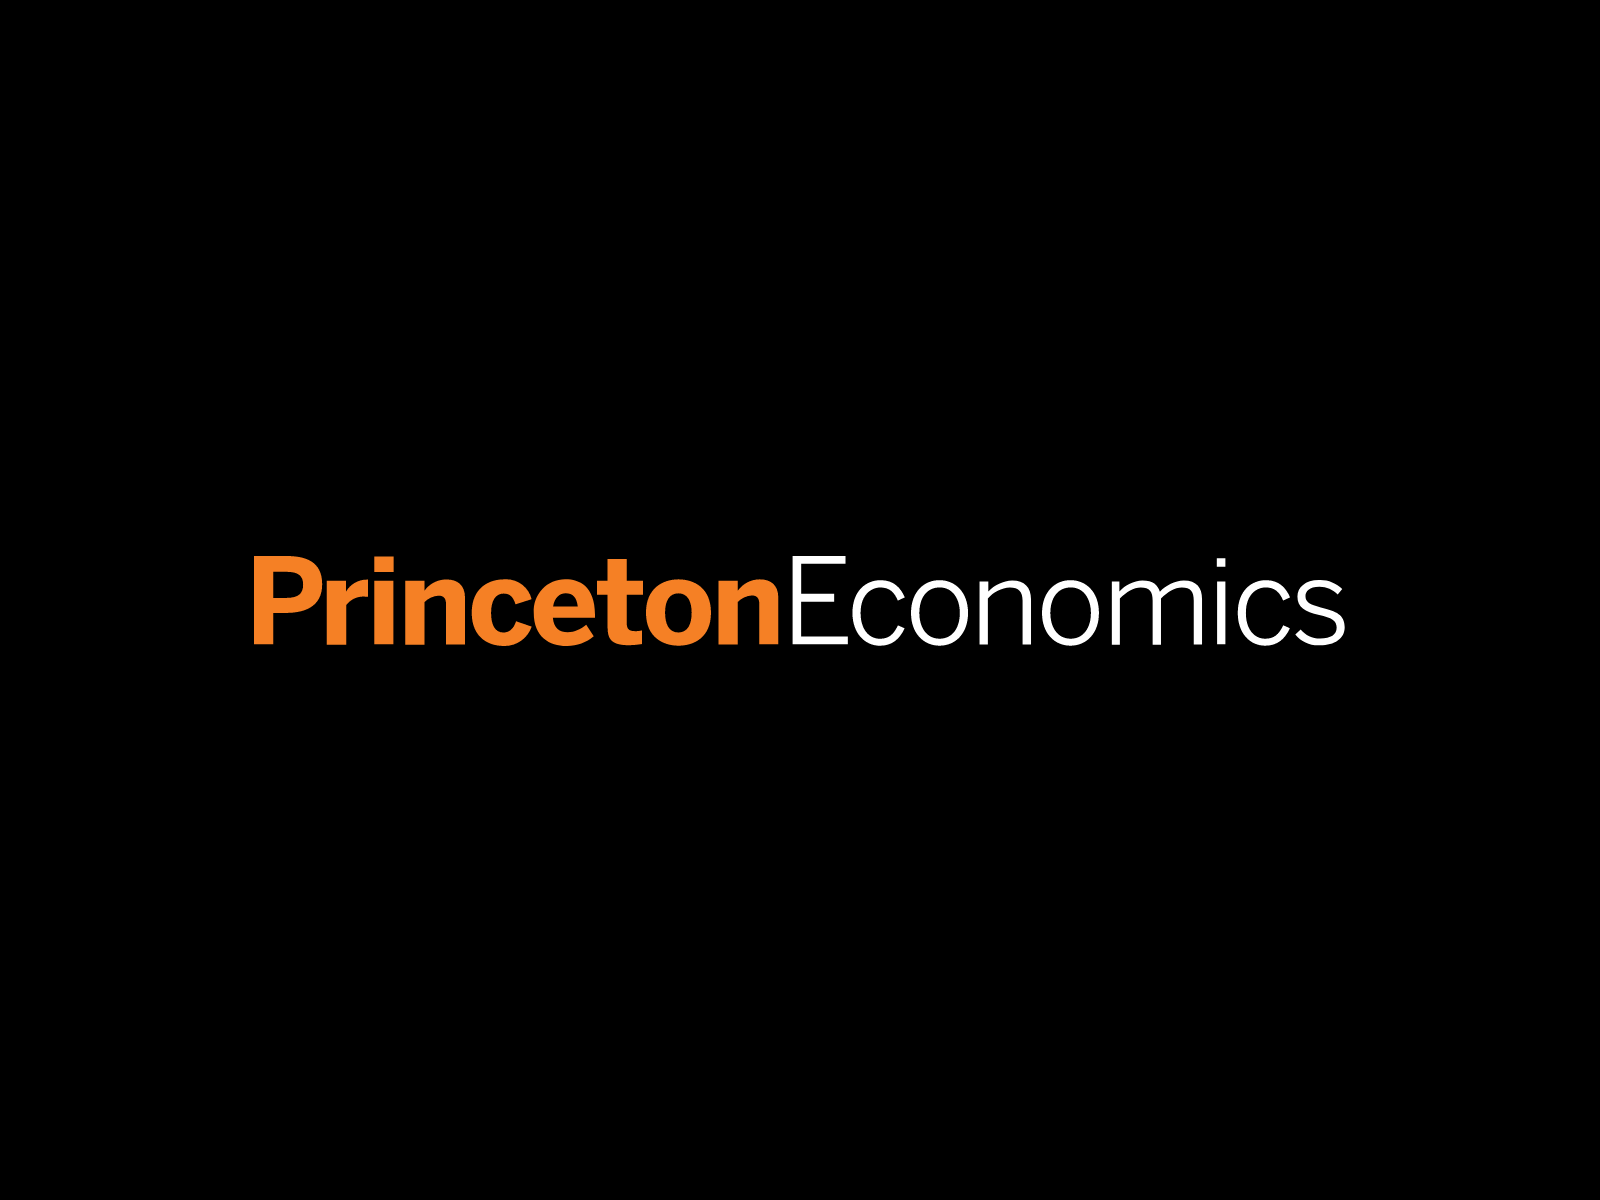 Princeton Economics Logo Design Black